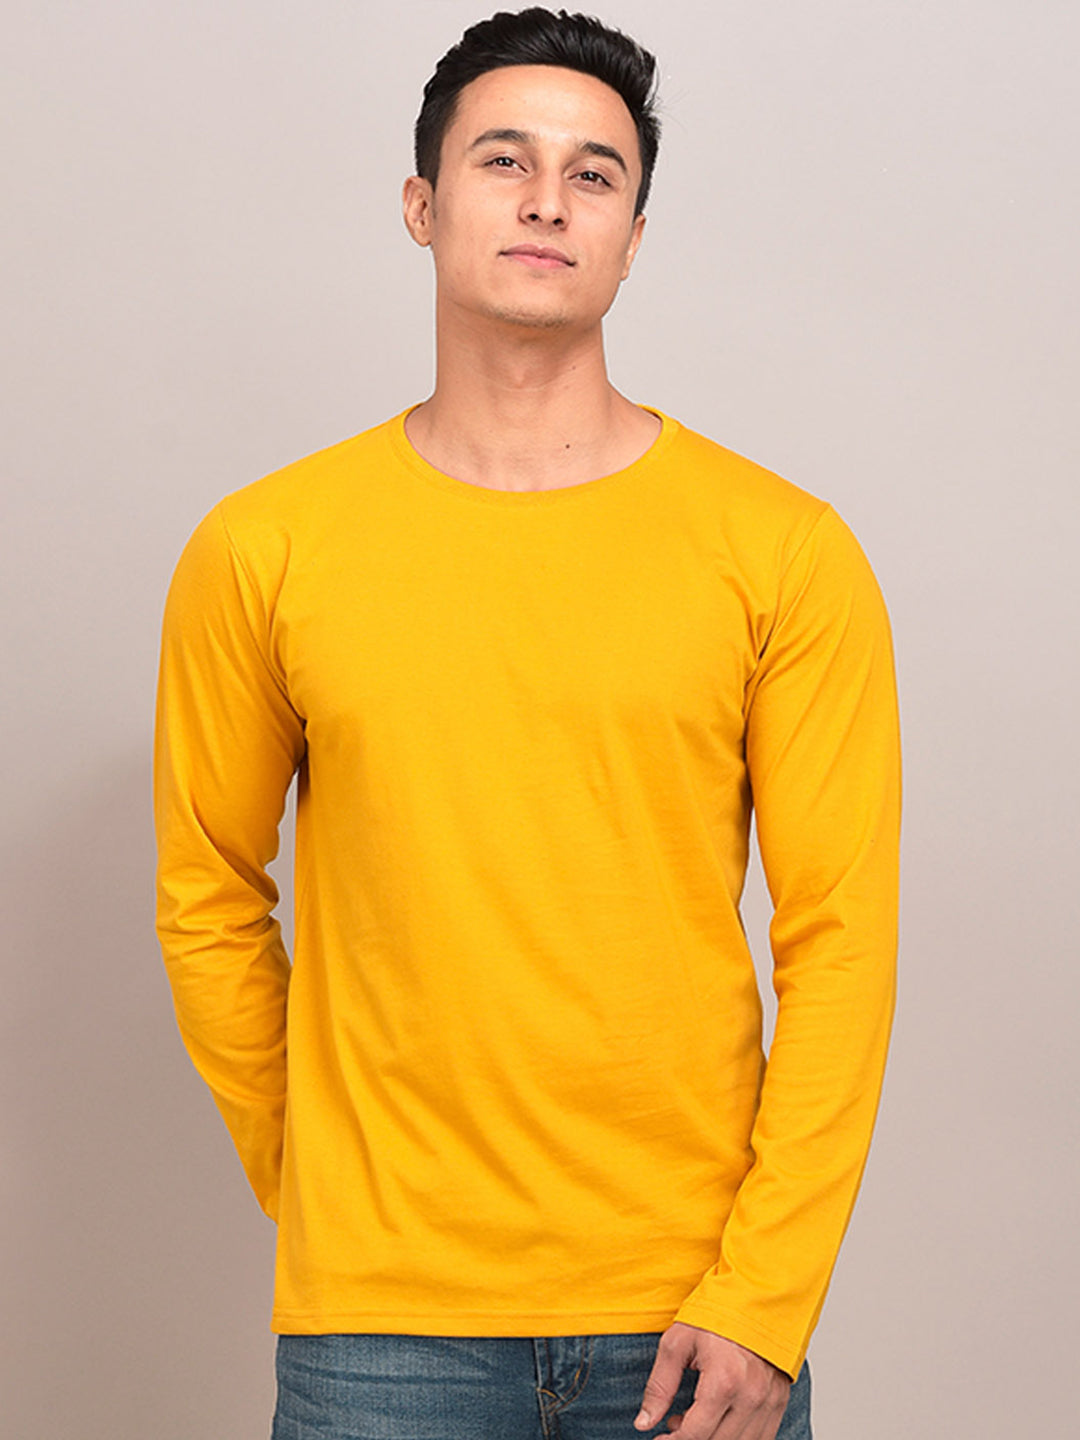 Plain Yellow Full Sleeves T-Shirt